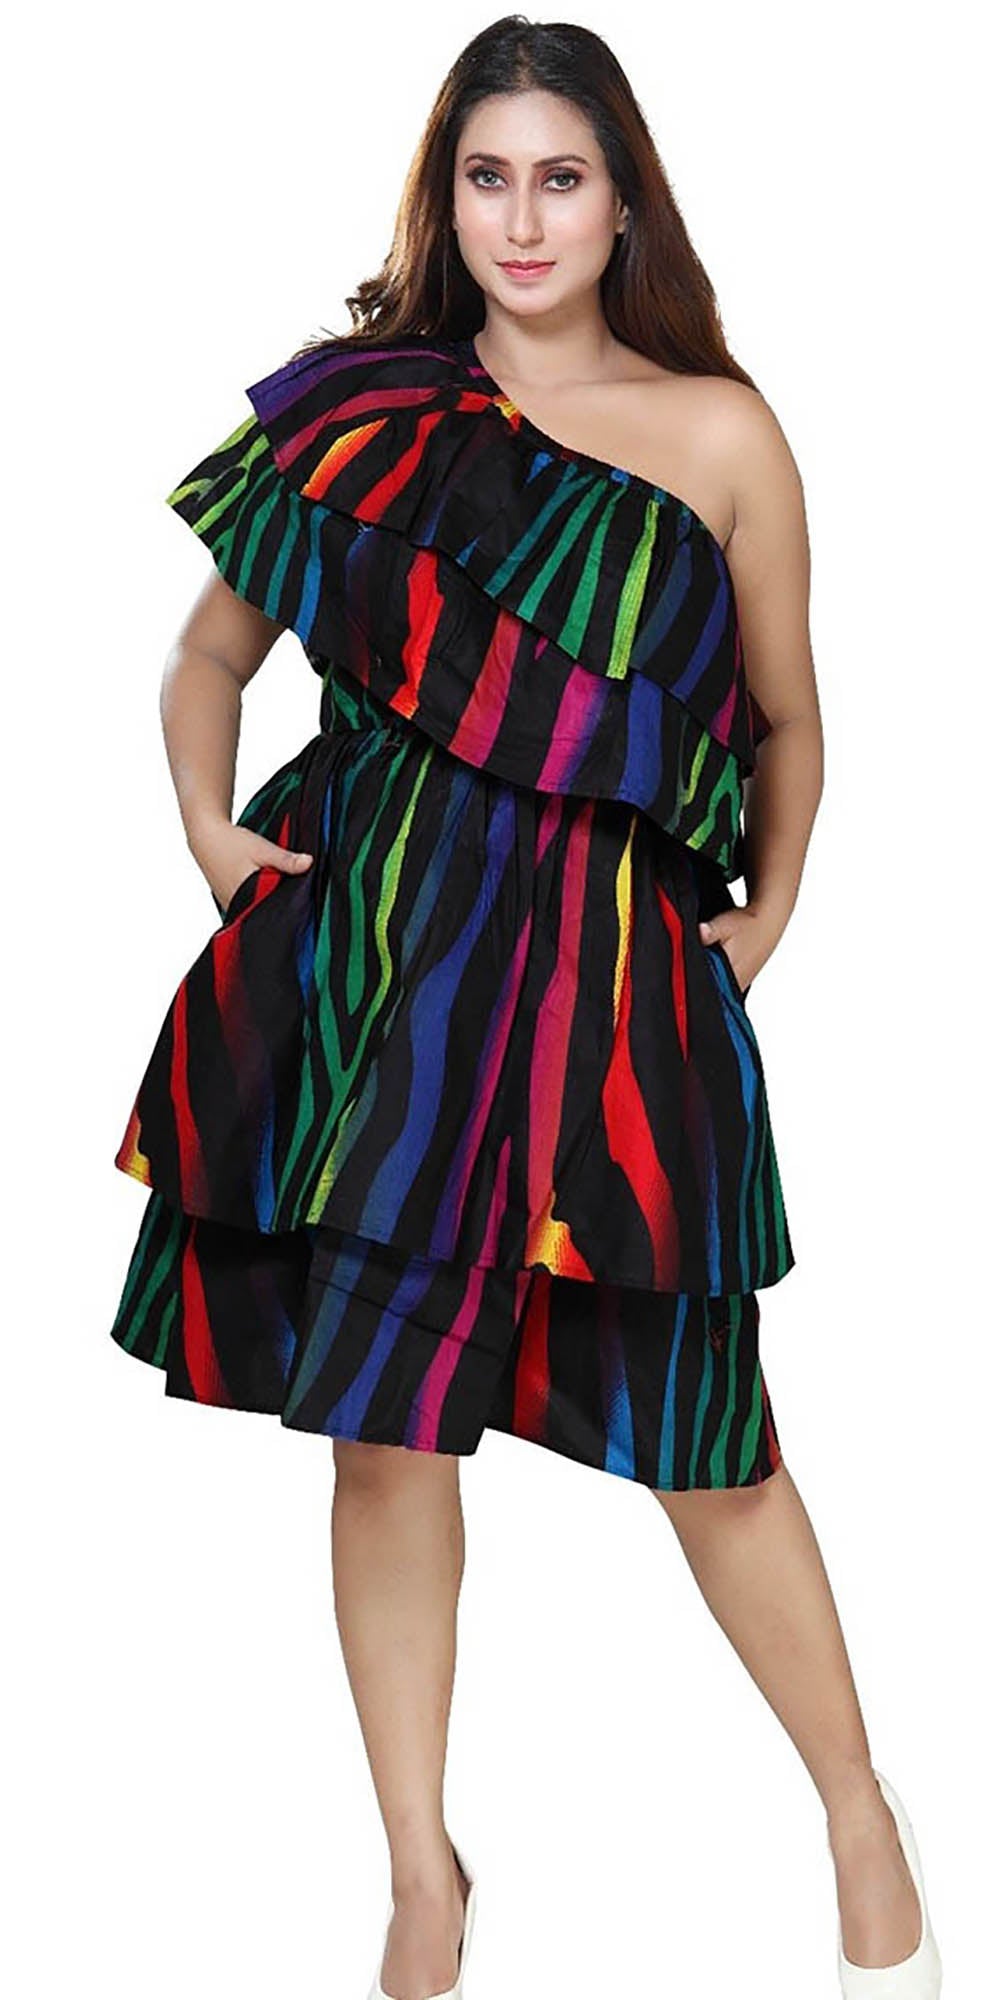 KaraChic 7682-555 - One Shoulder Layered Ruffle Dress